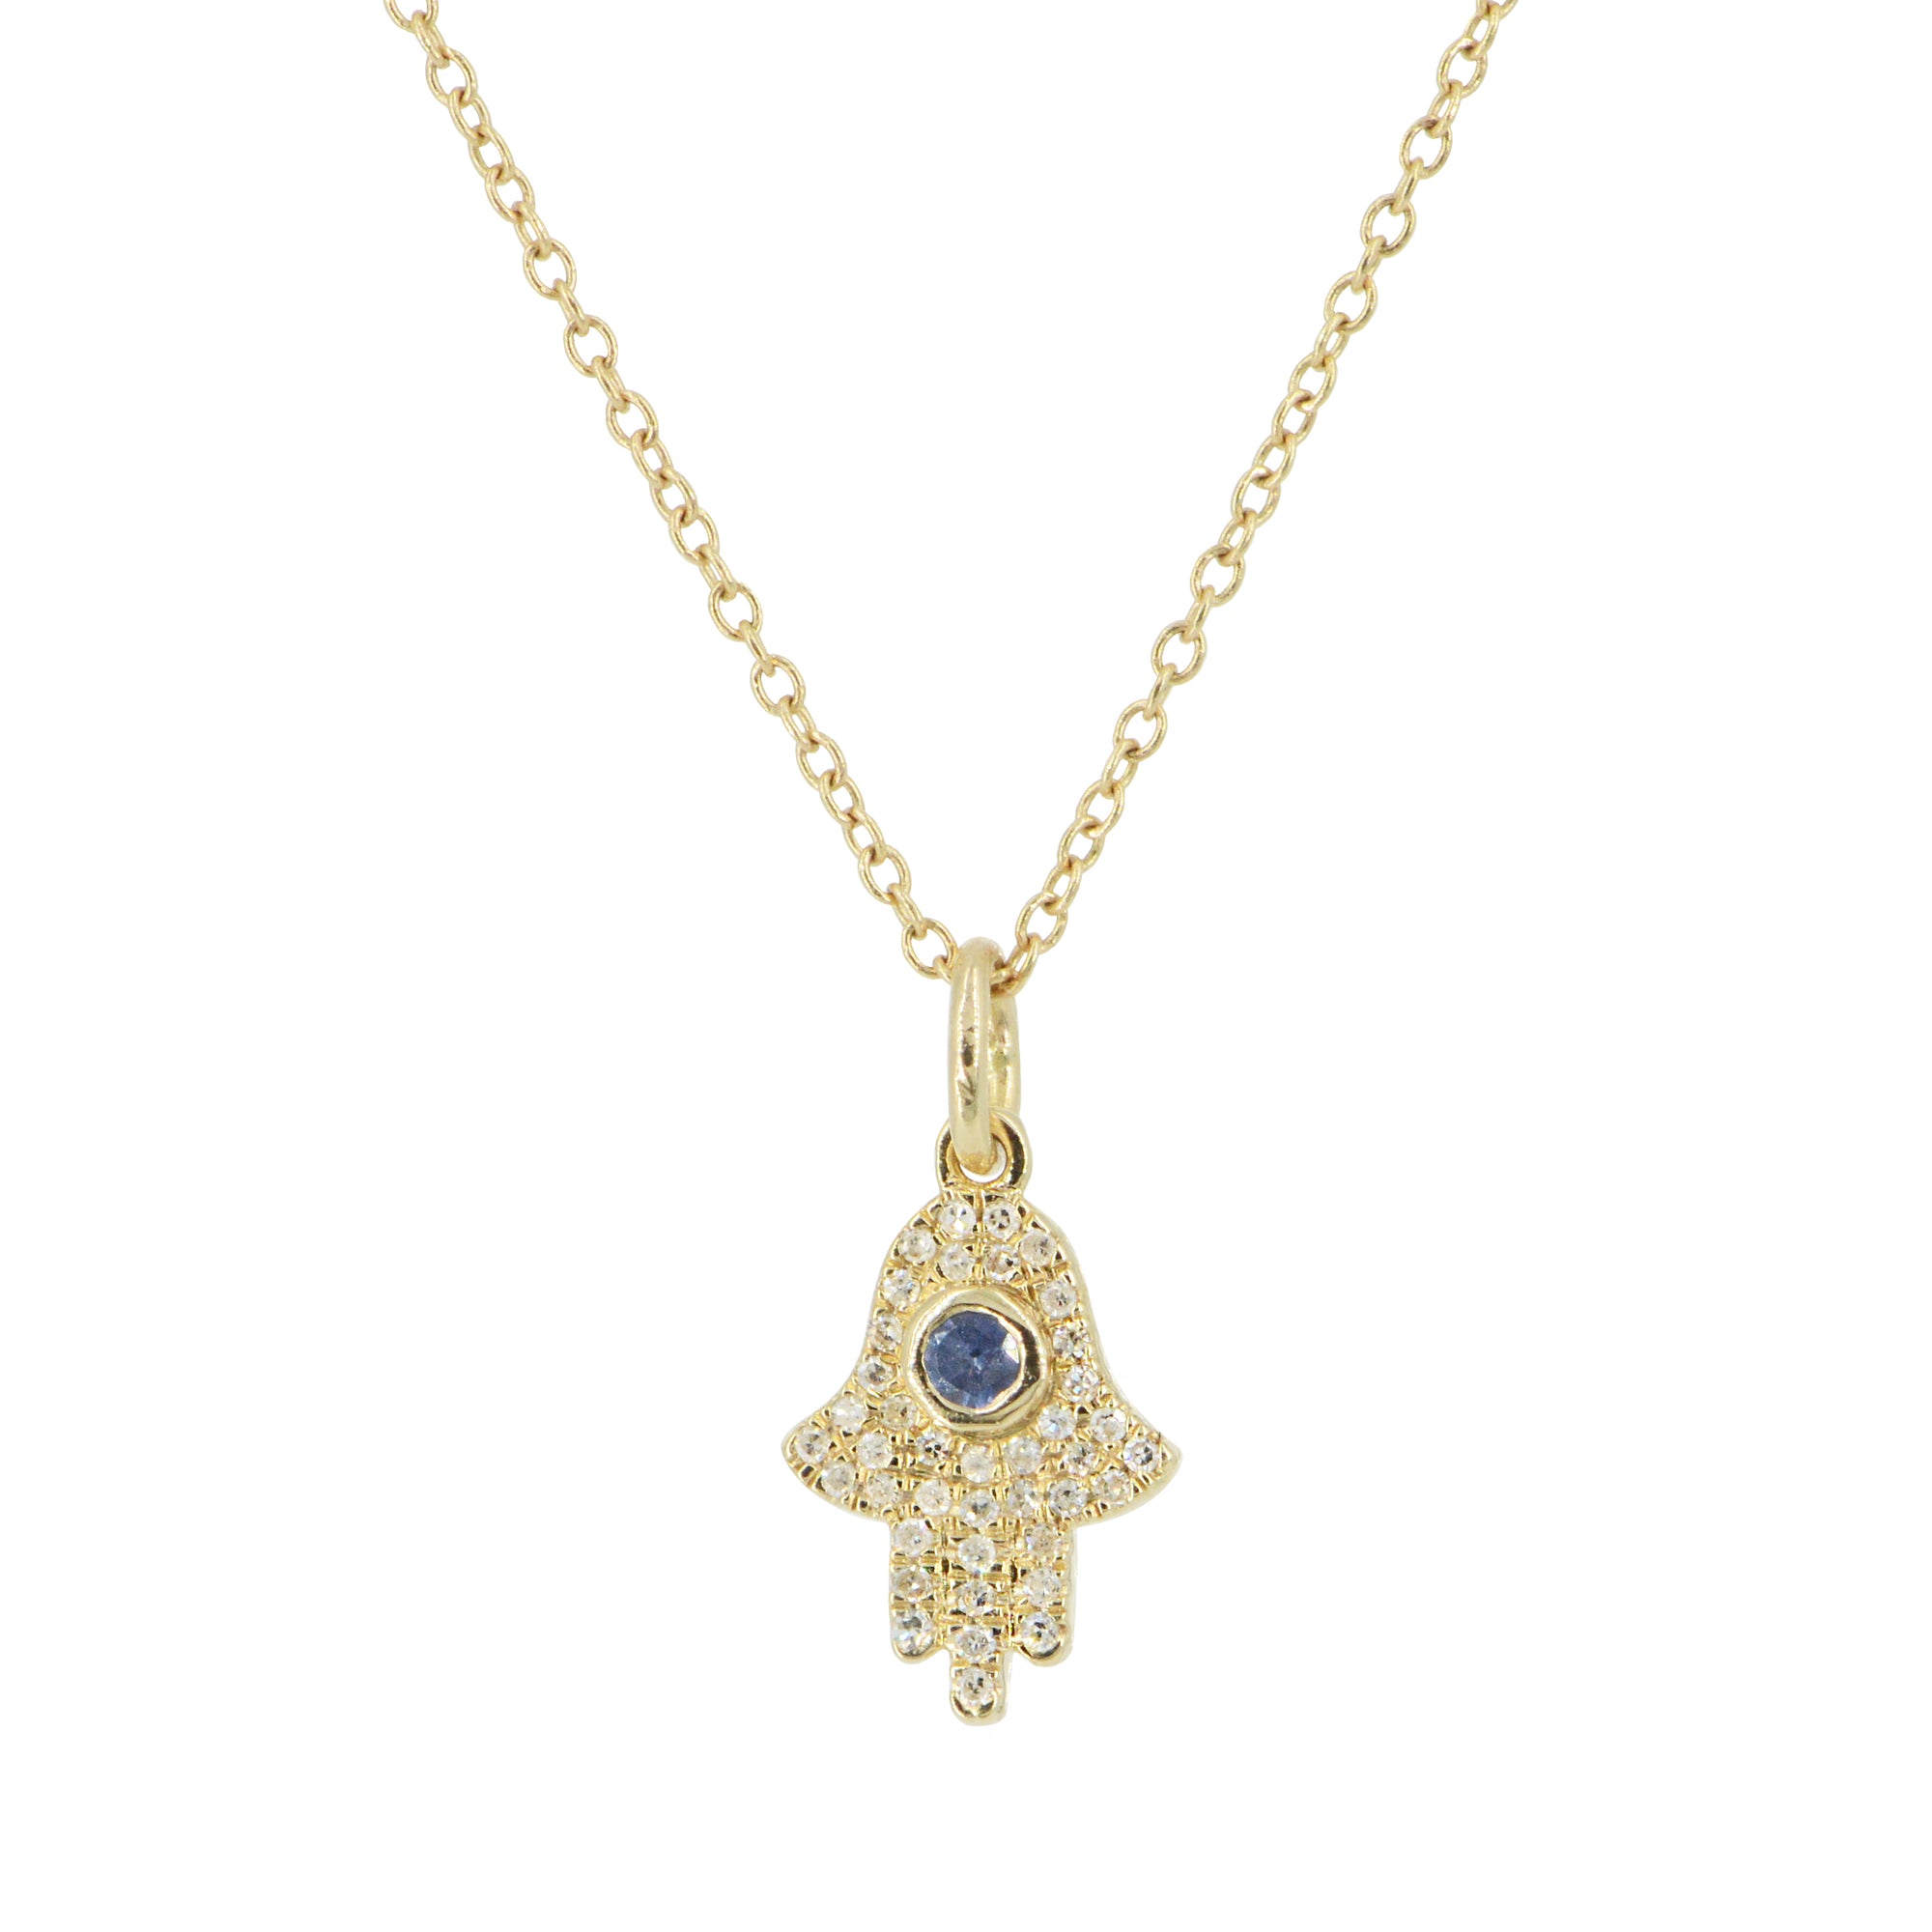 Hamsa Hand Necklace With Blue Sapphire and Diamonds - Mini